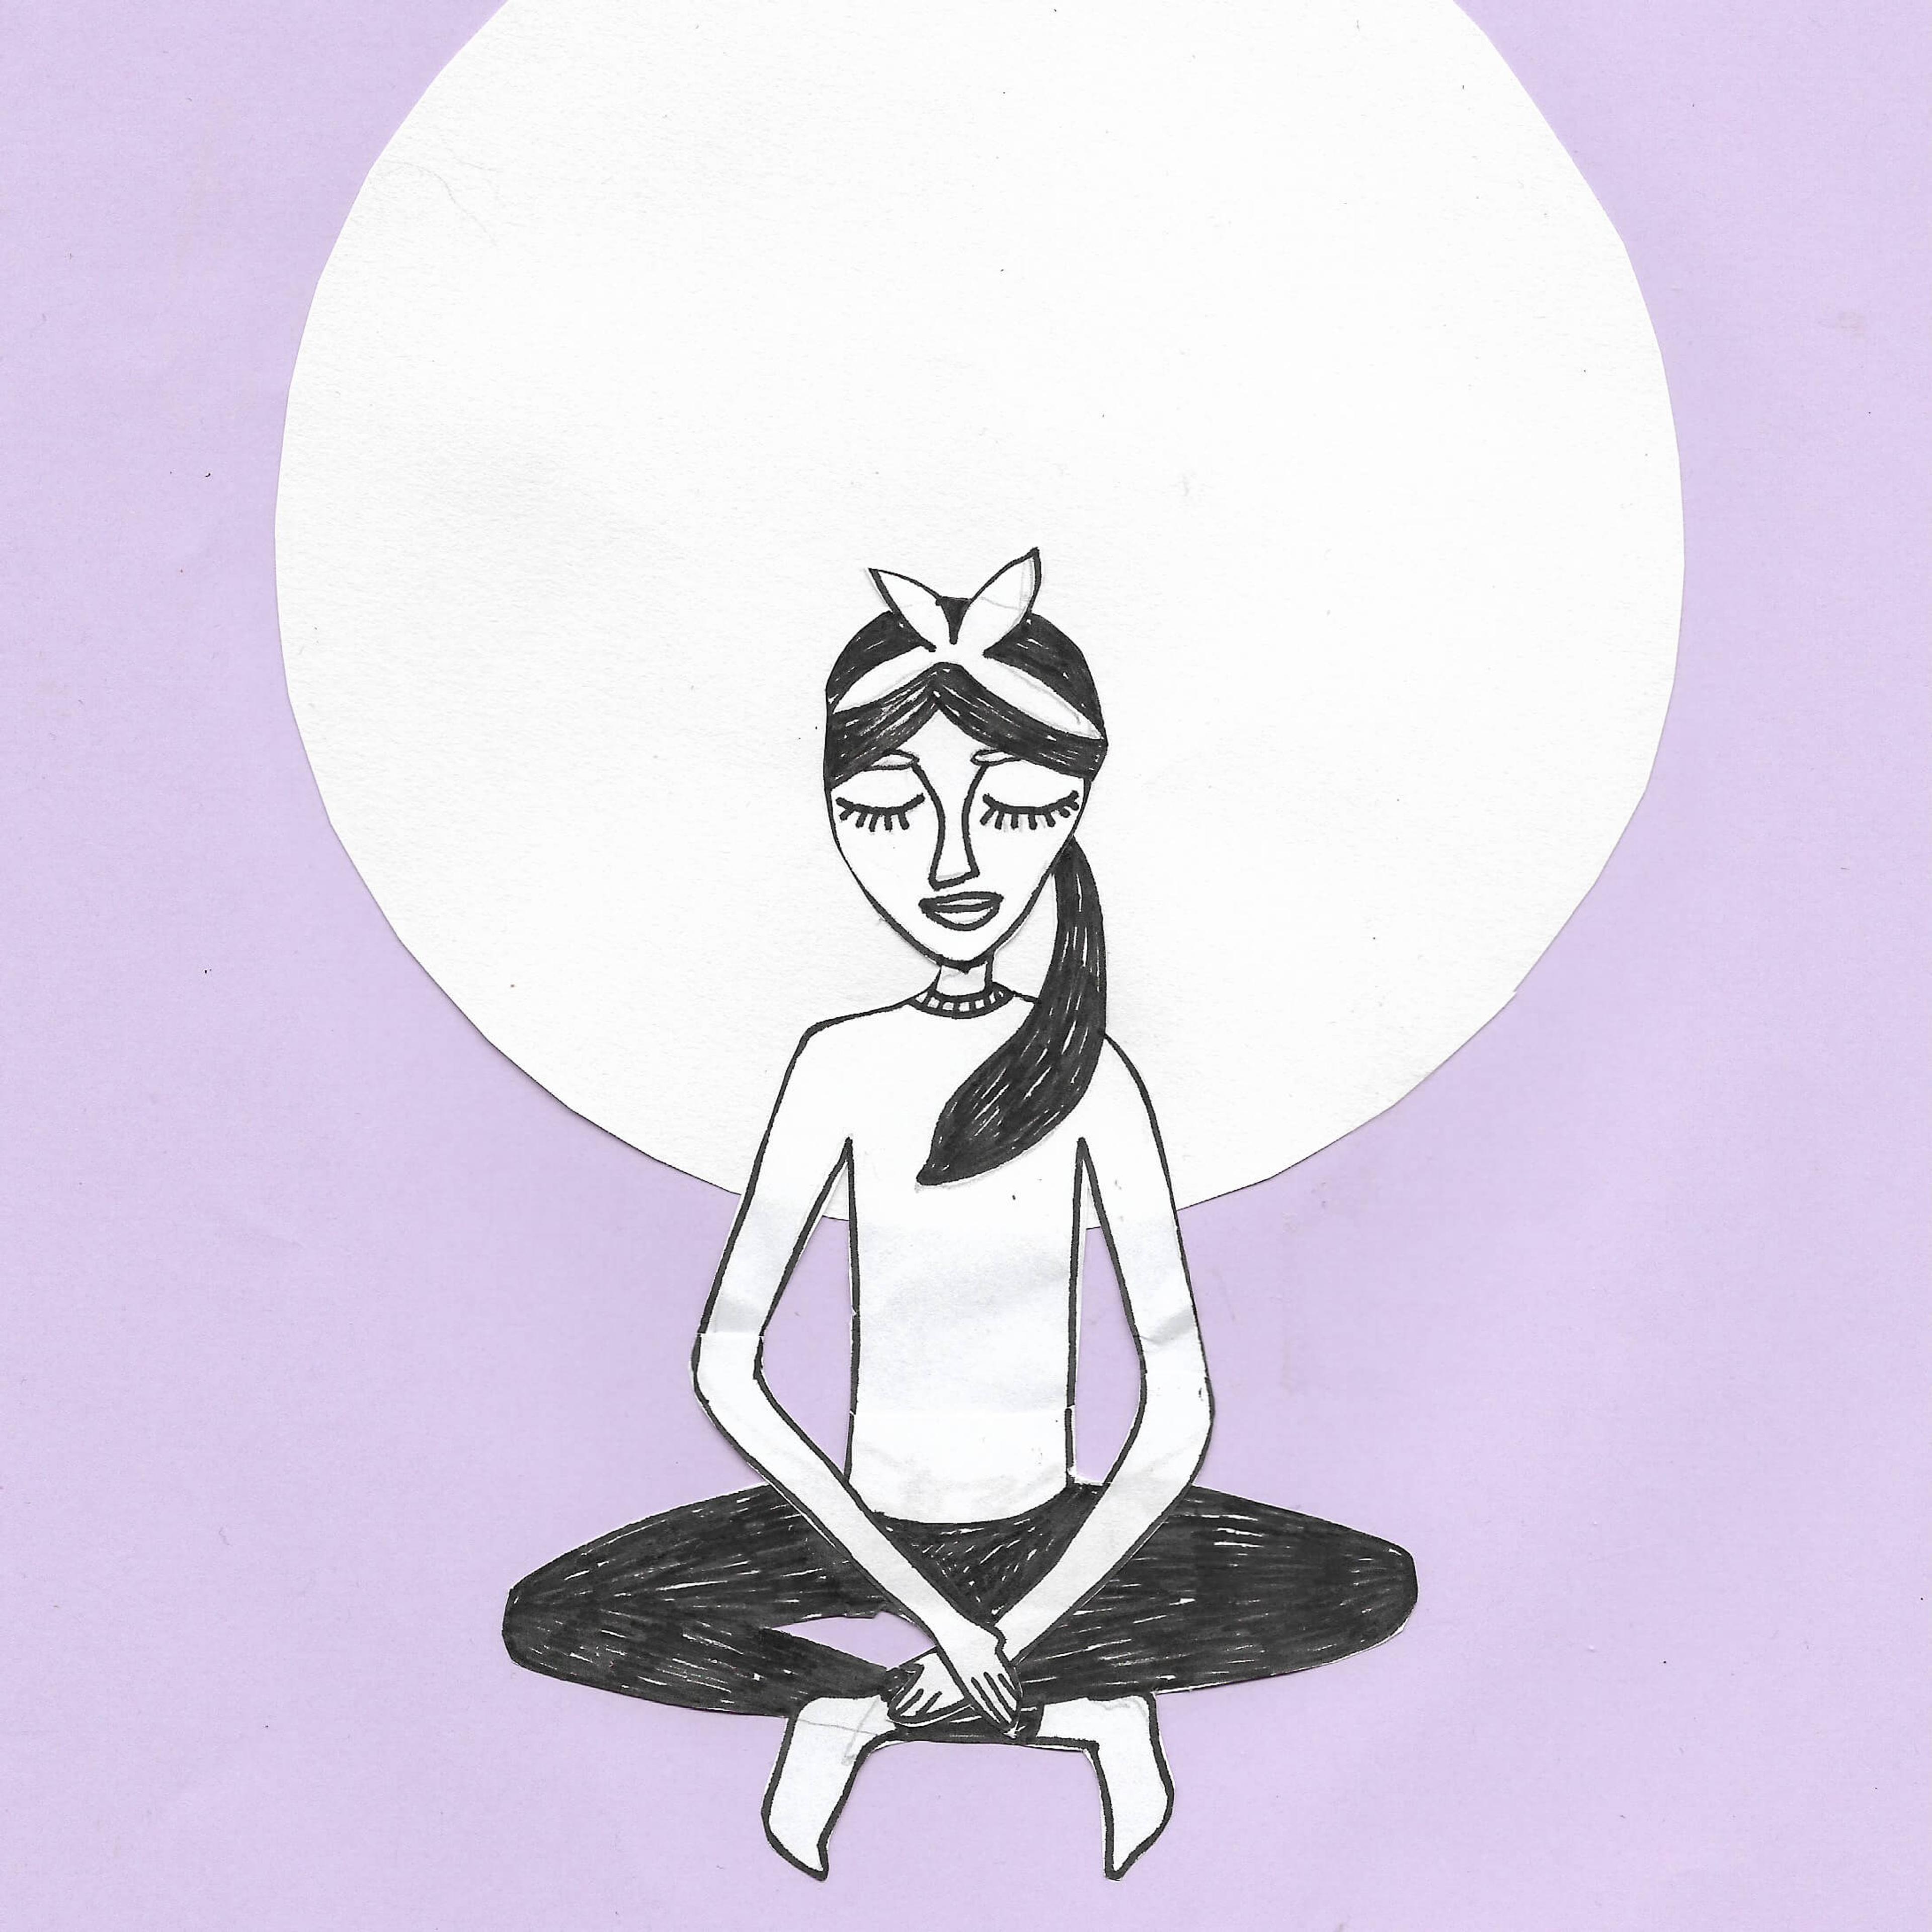 A meditating woman set against a violet backdrop